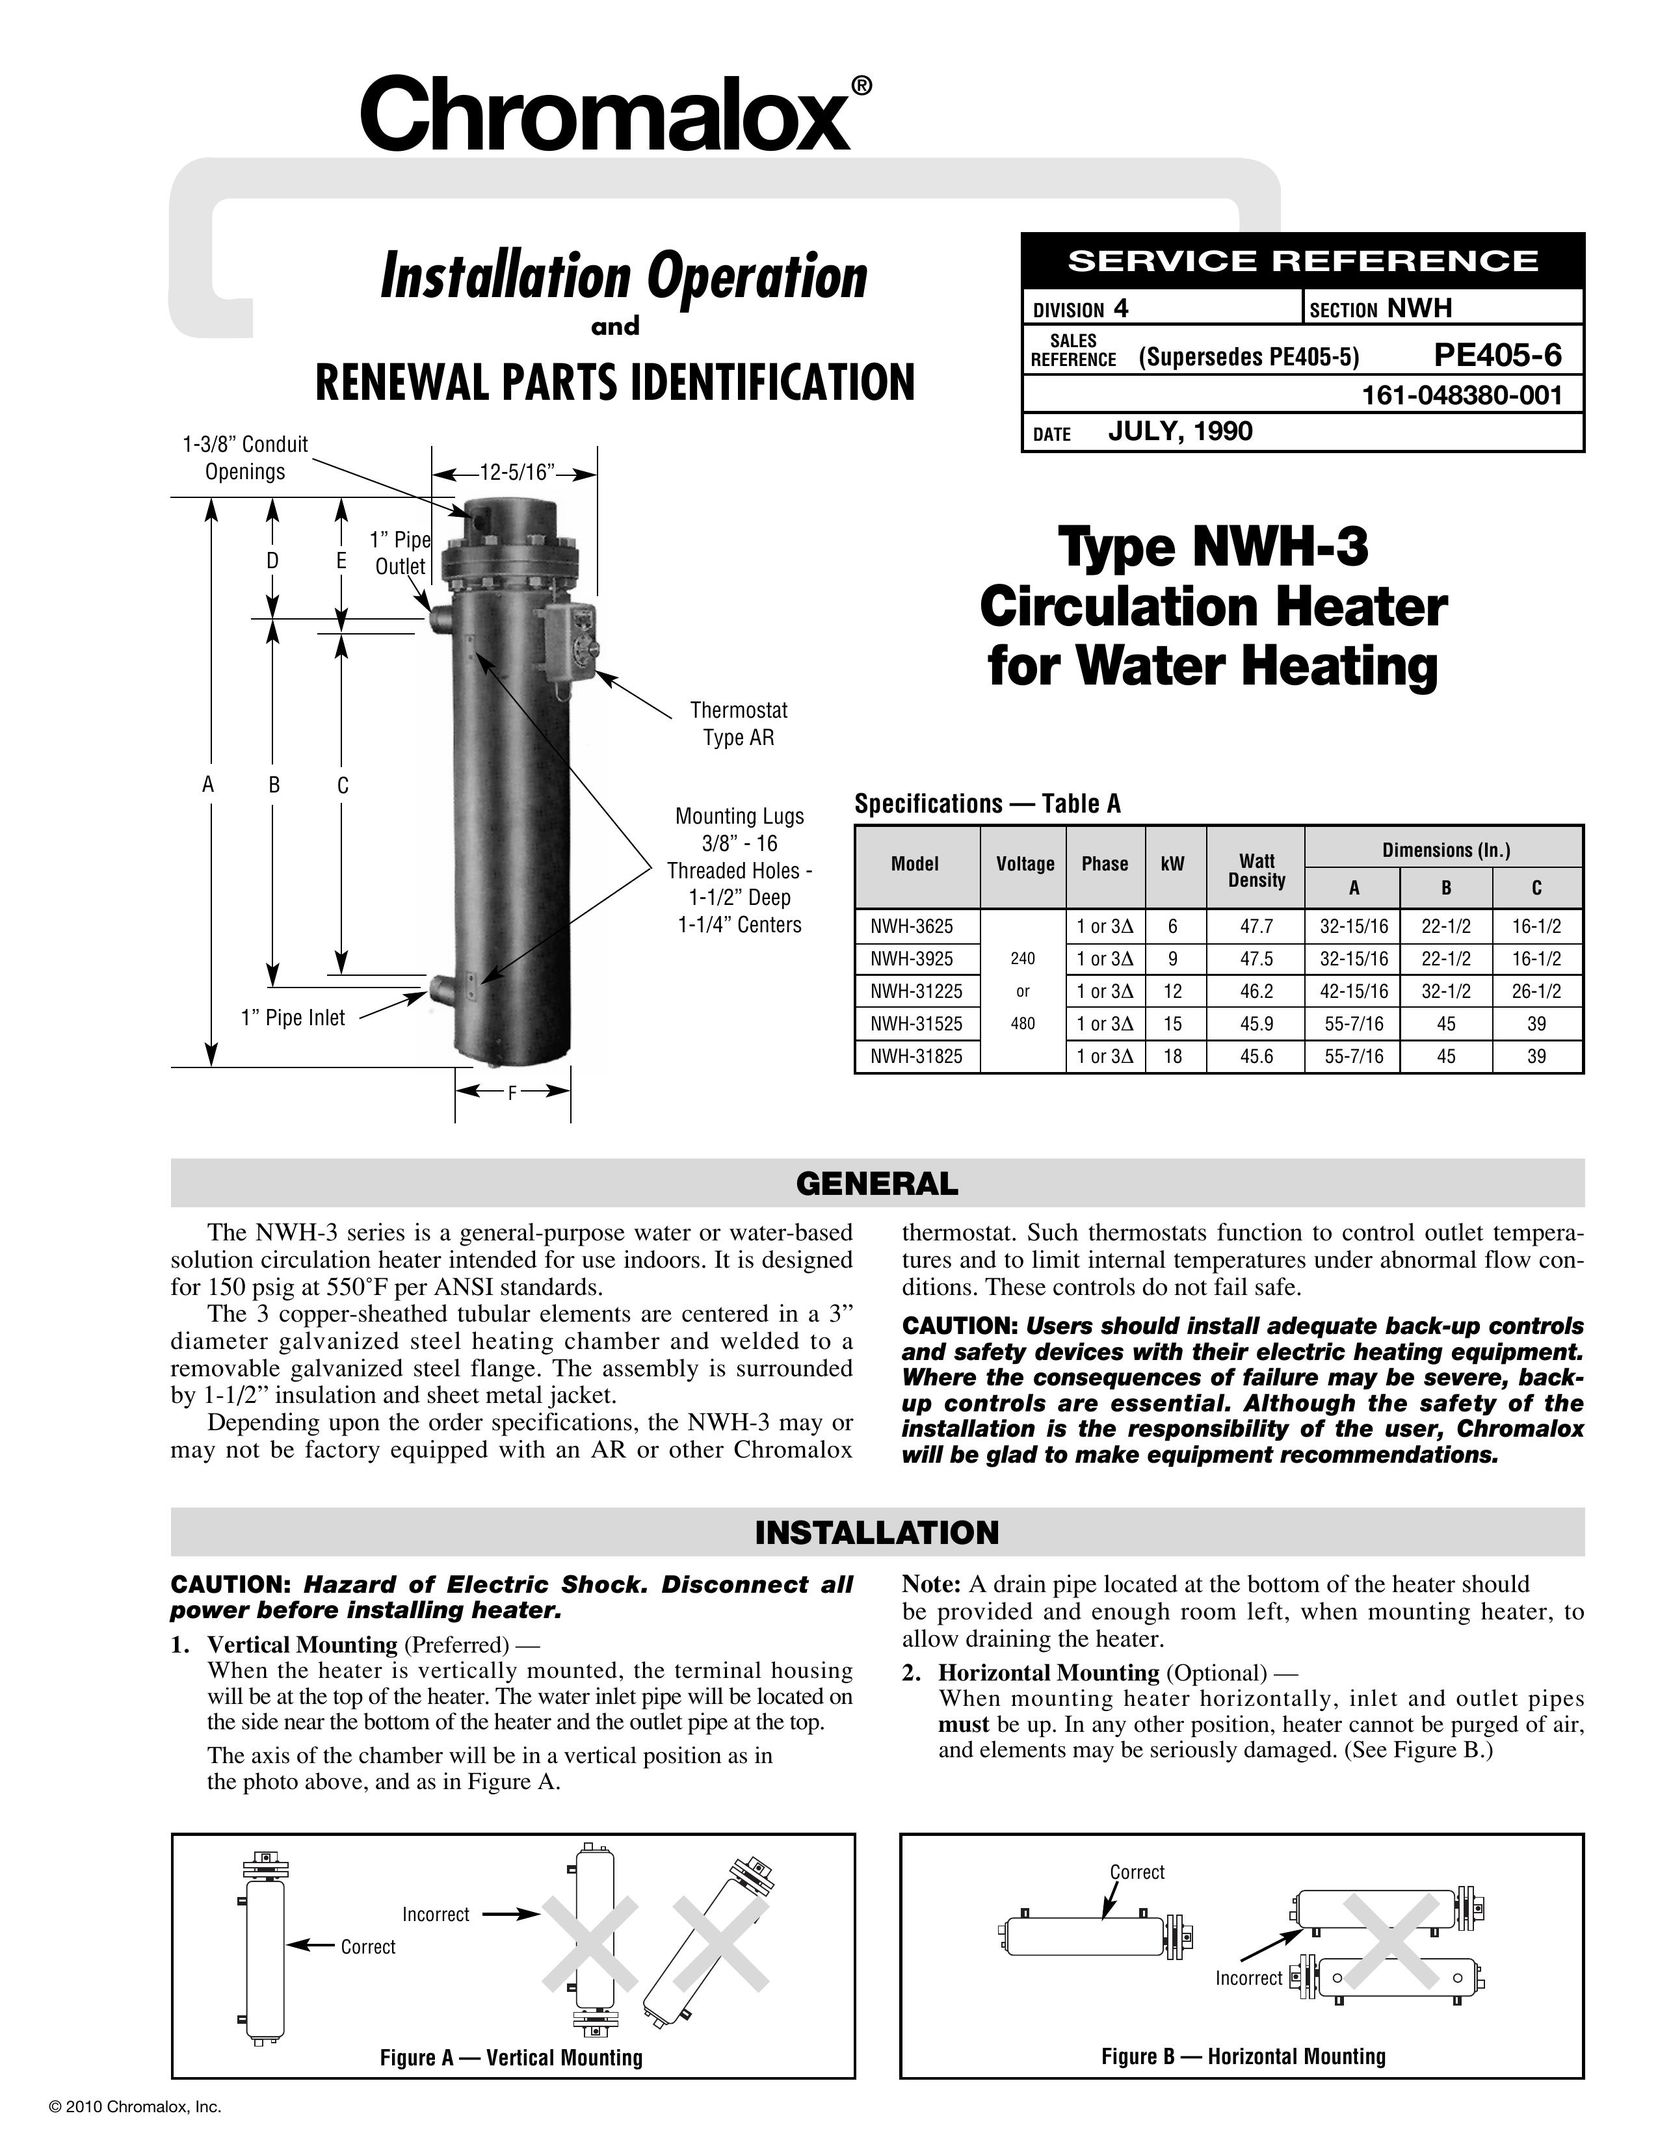 Chromalox NWH-31225 Water Heater User Manual